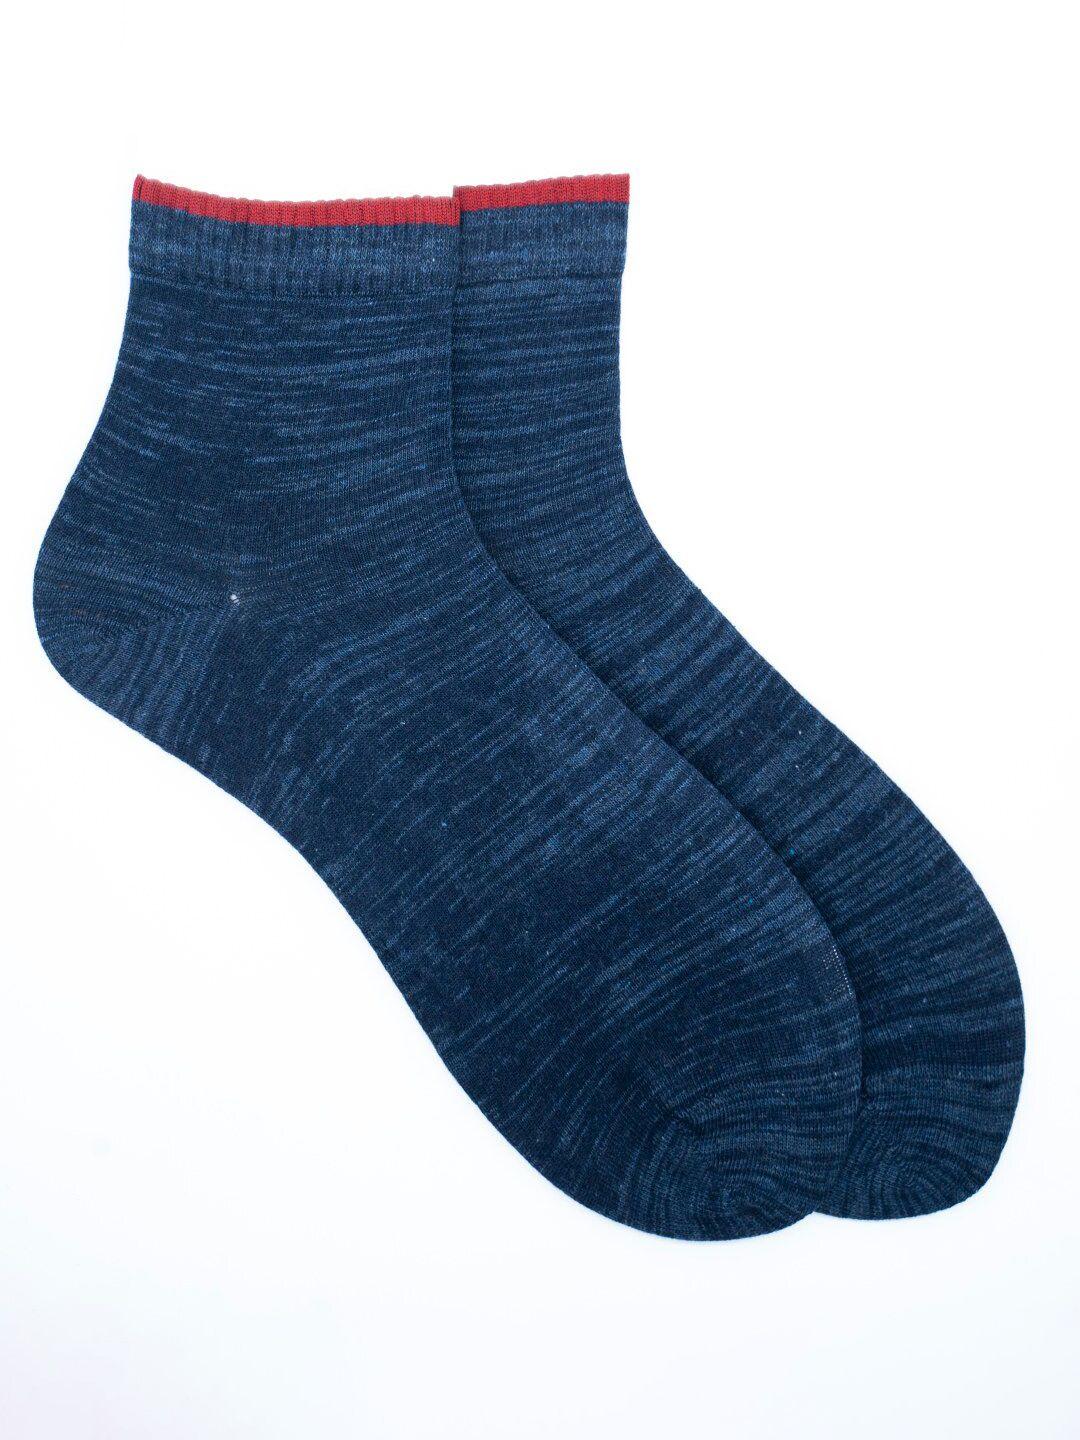 soxytoes navy blue solid ankle length cotton socks